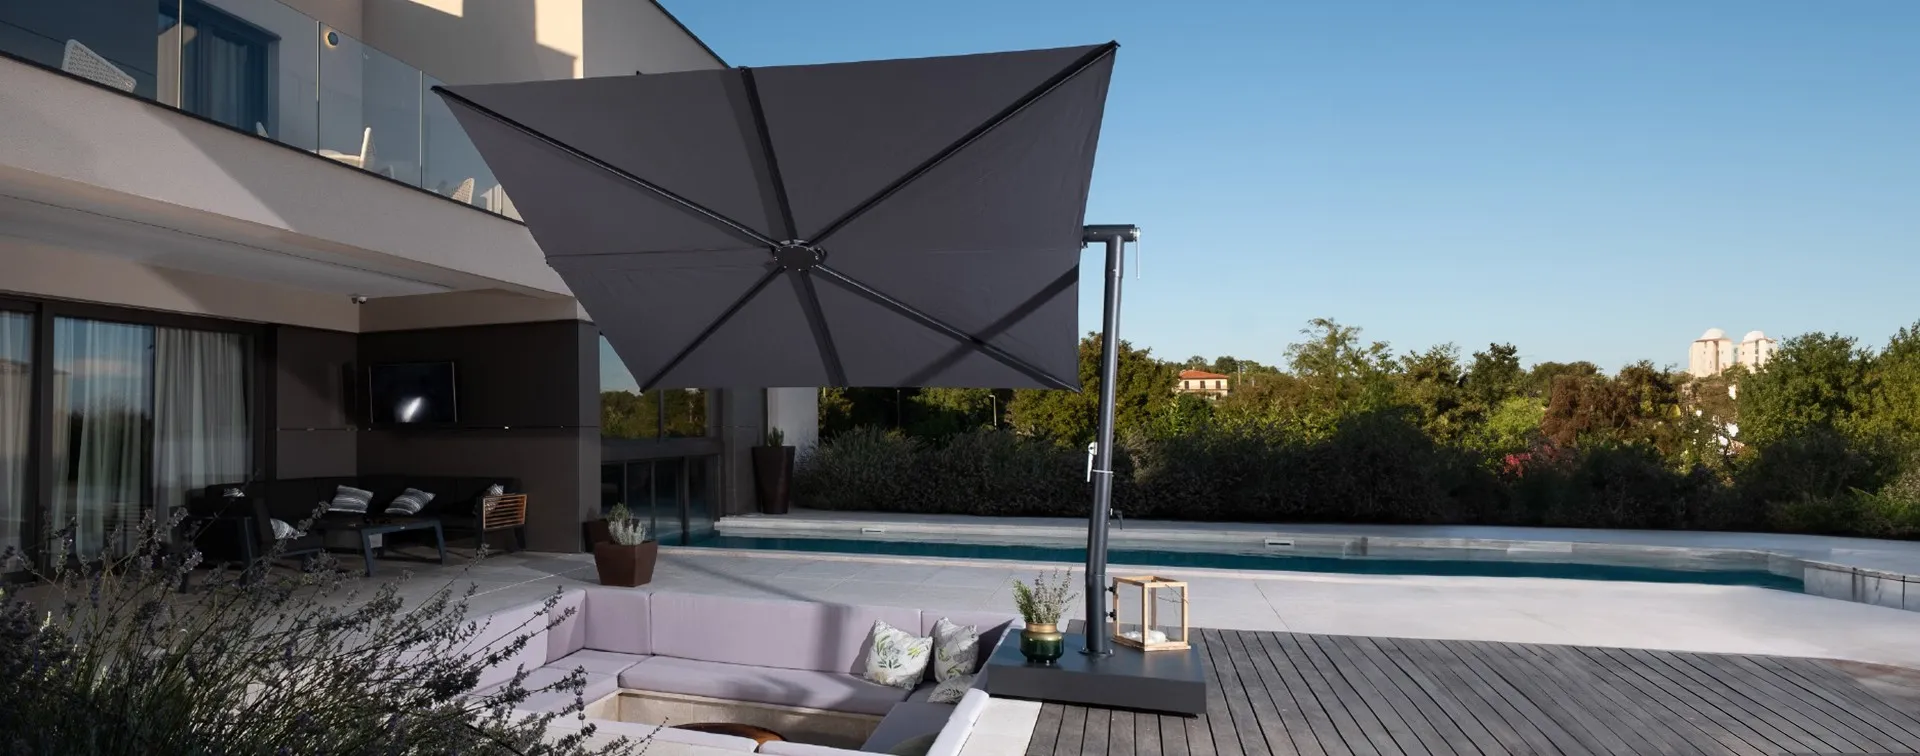 Ombrelloni con design flat - Scolaro Parasol - Ombrelloni da giardino